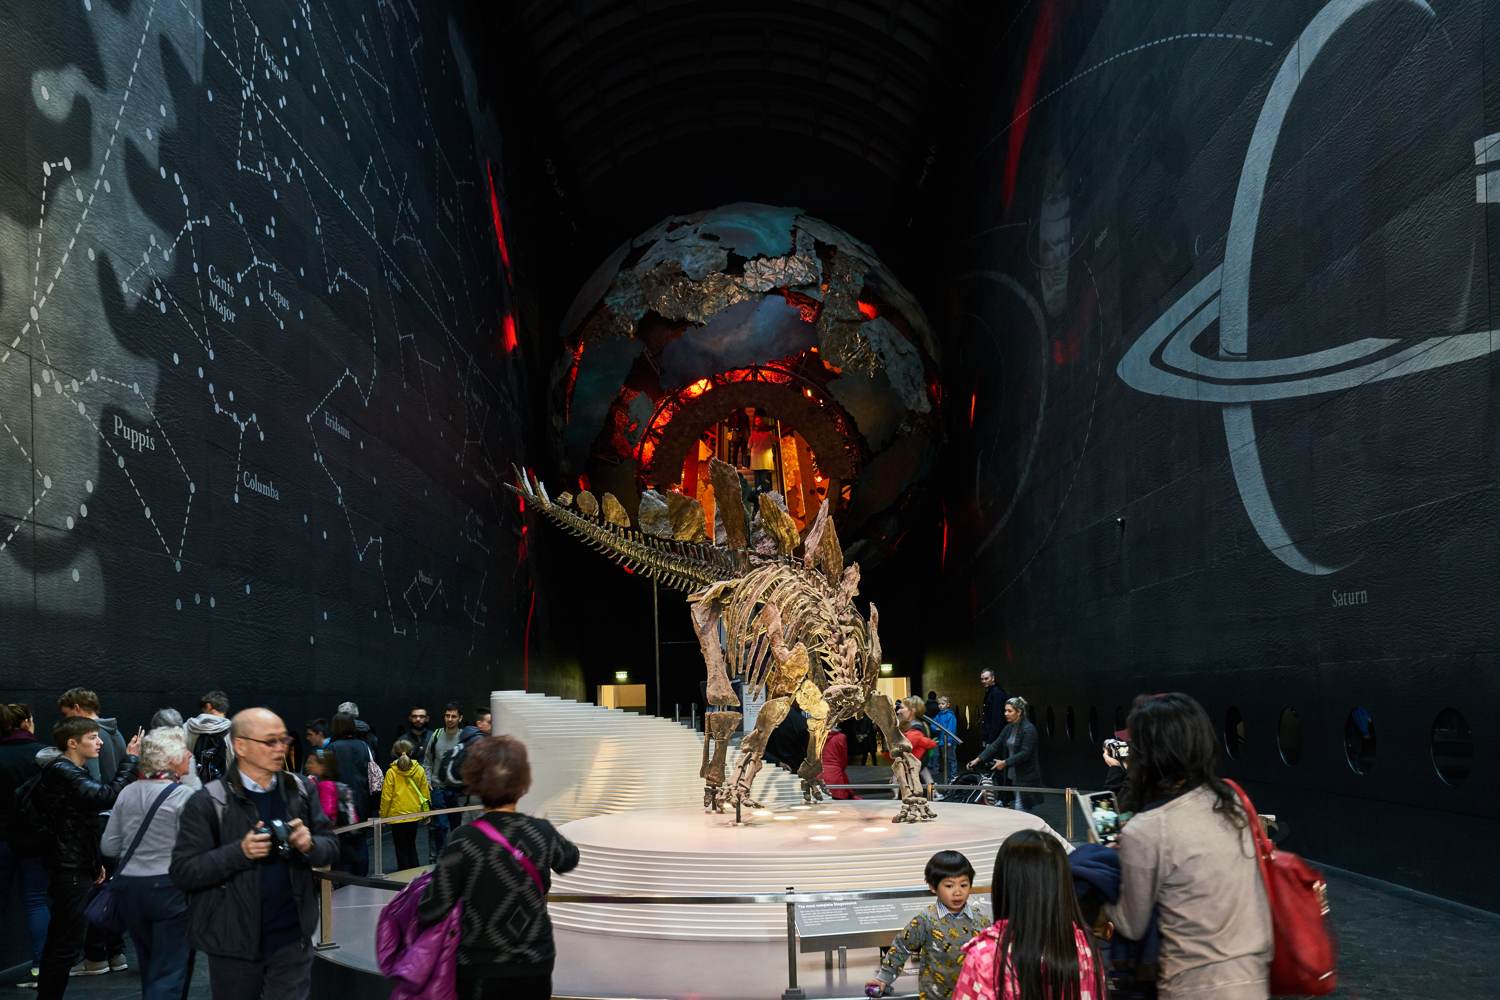 Science Museum dinosaur exhibit in London - Coach transport for school trips